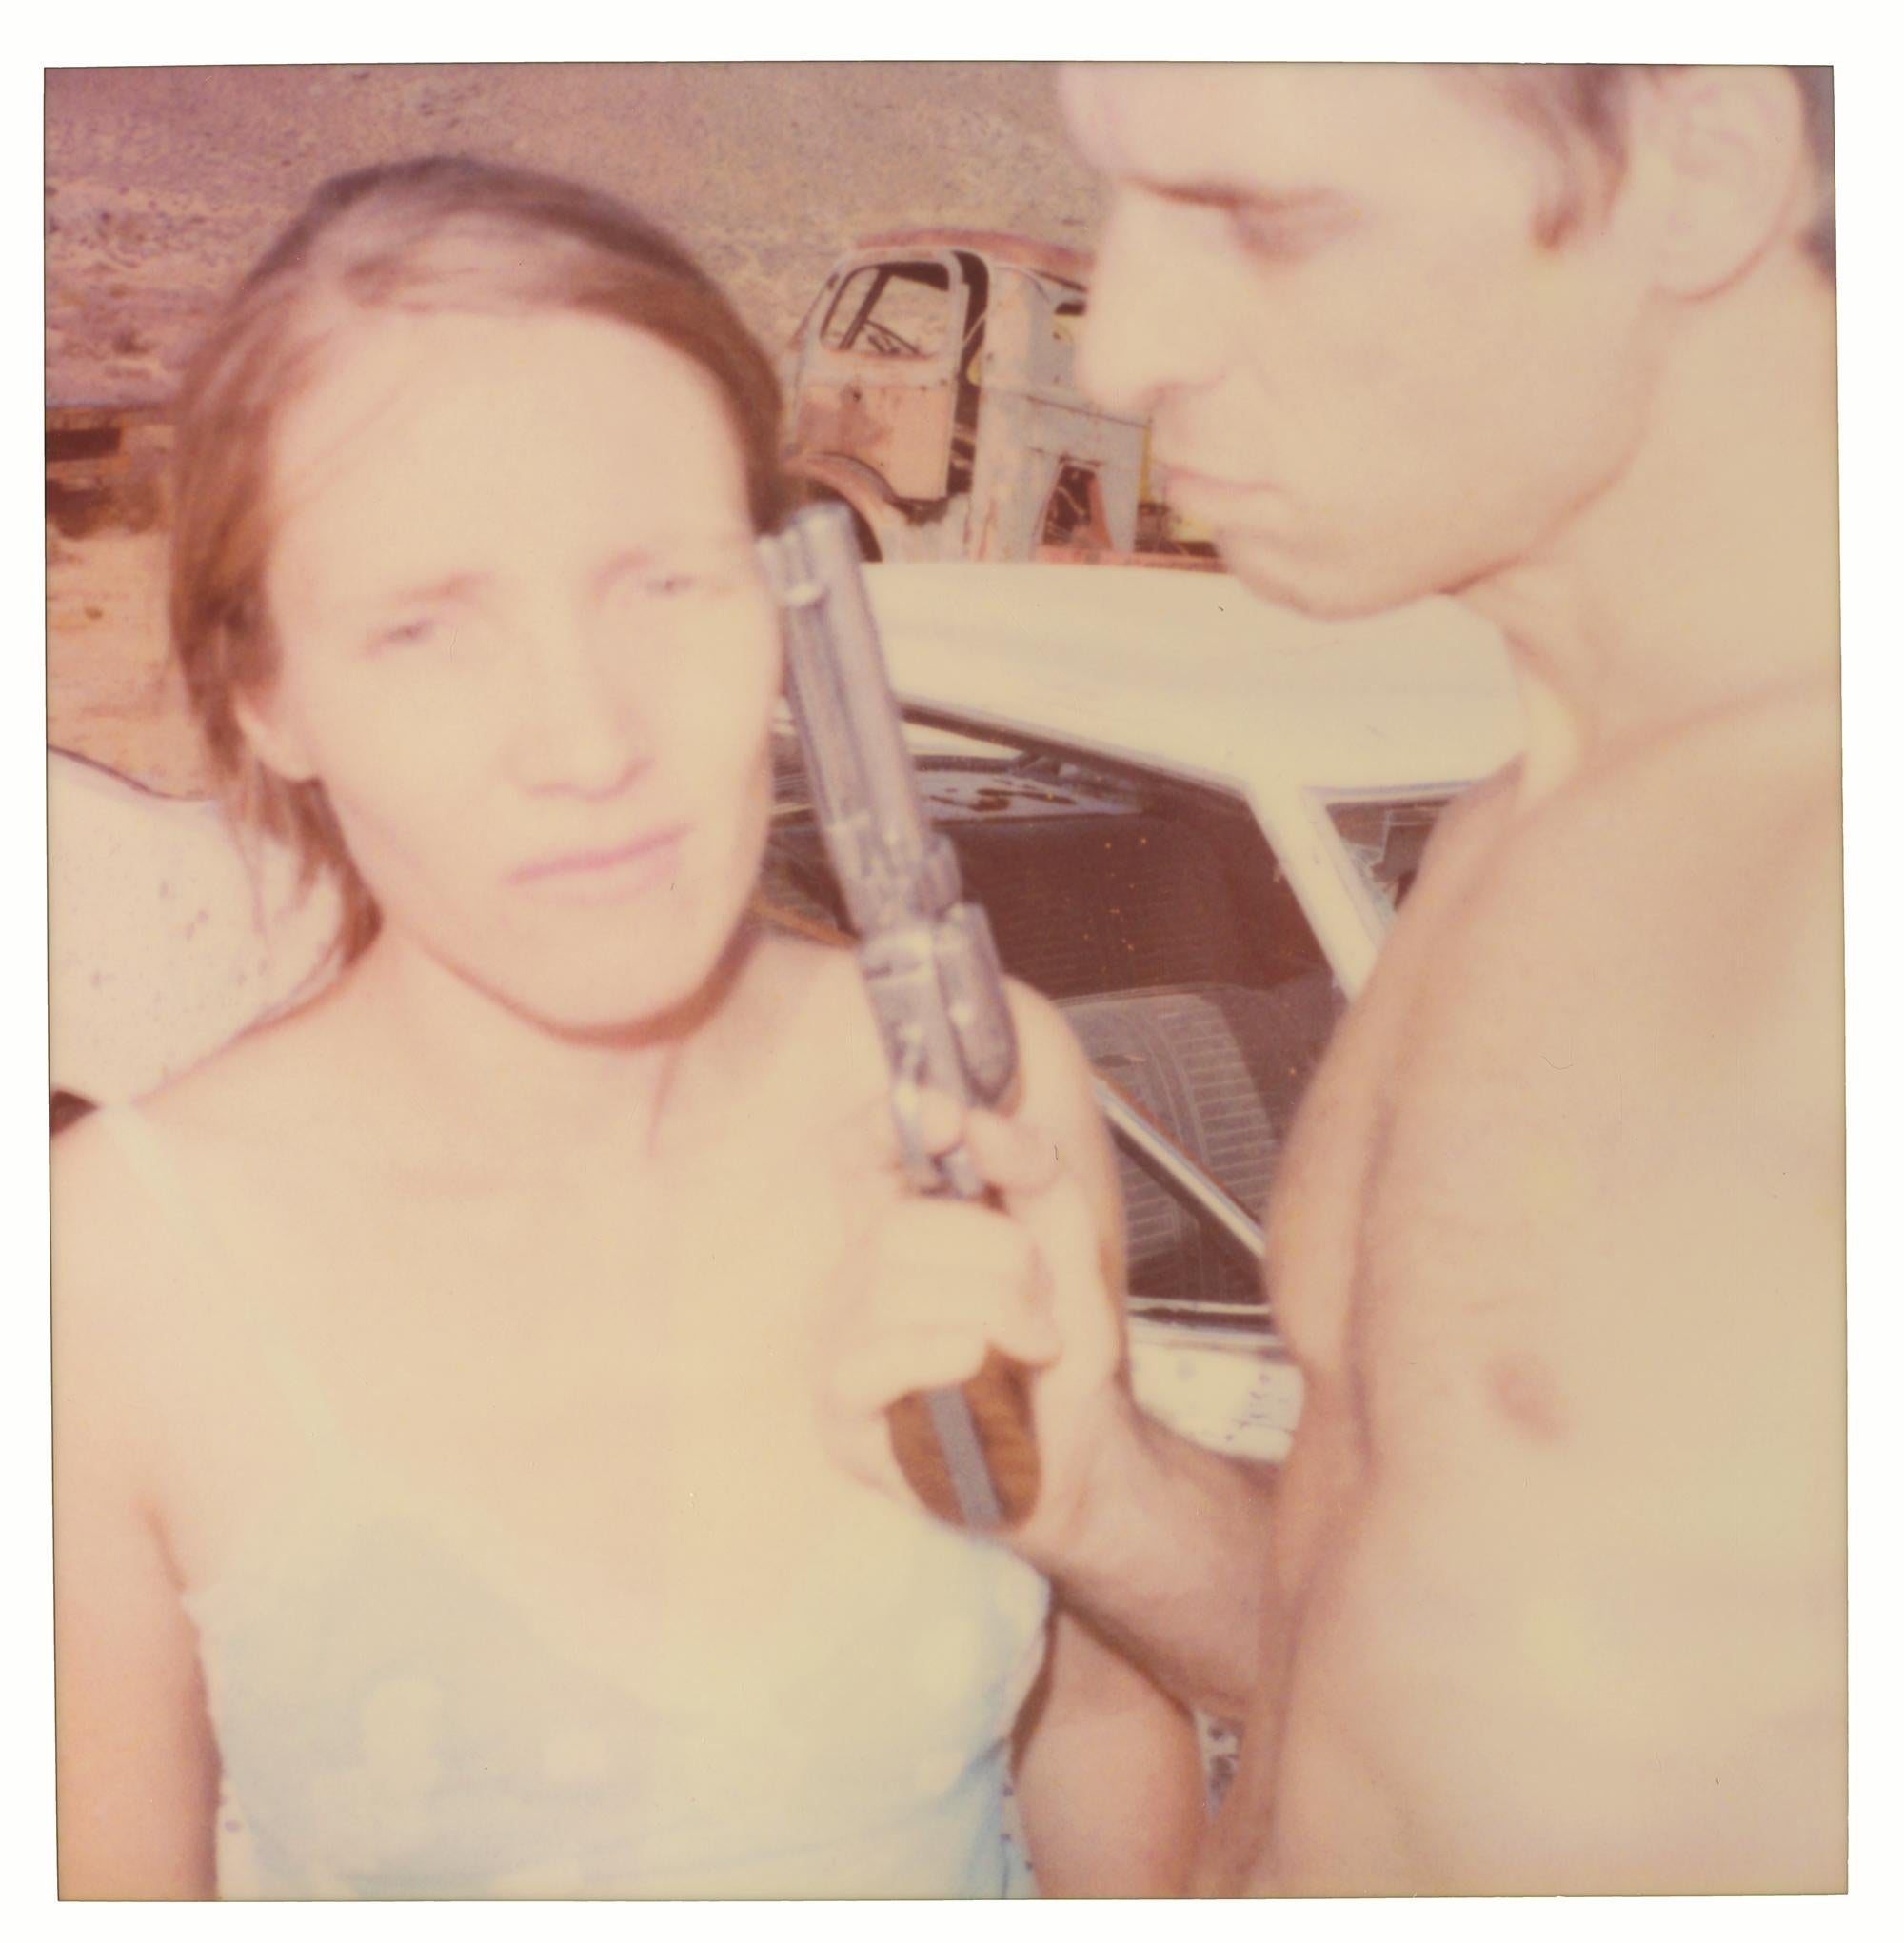 Randy and I - part 2 (Wastelands) - Polaroid, analog, mounted, Contemporary